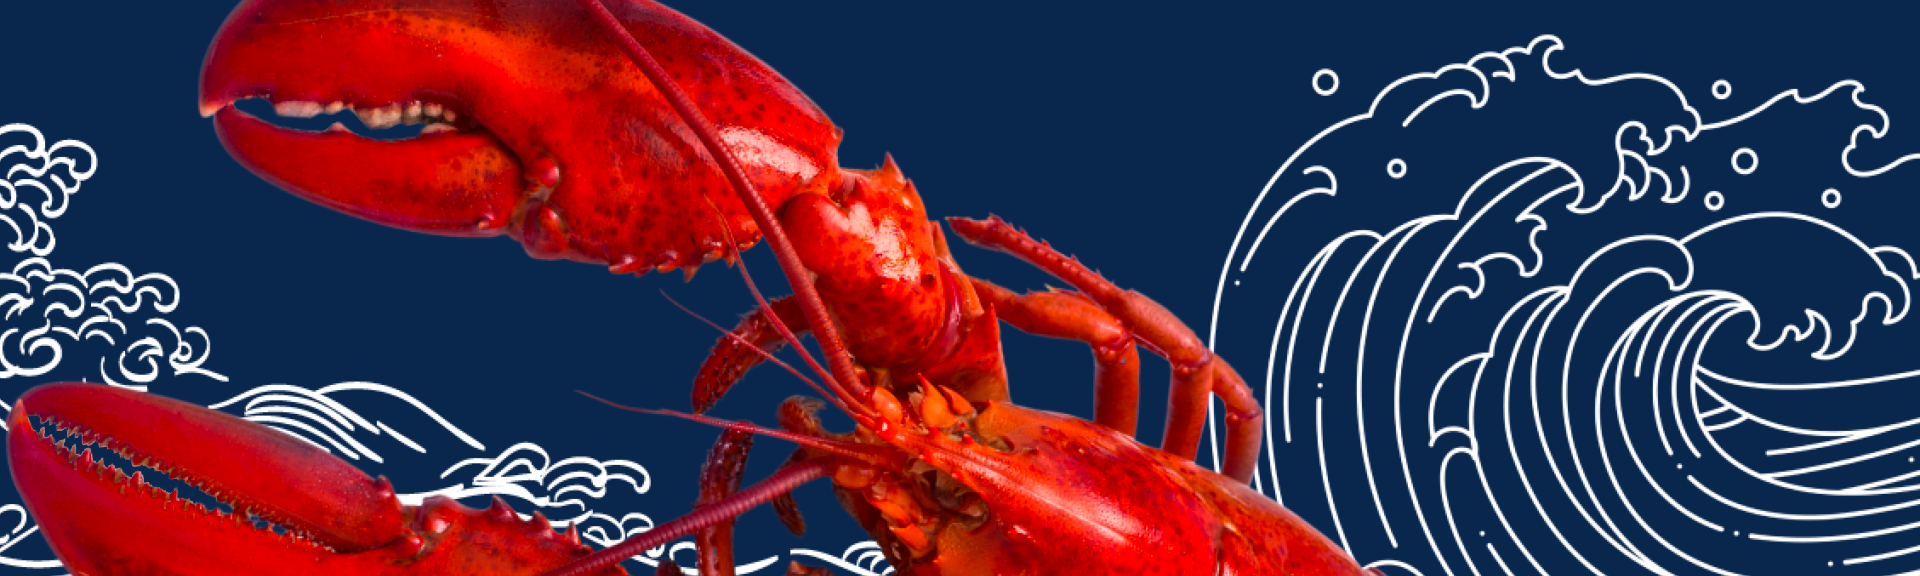 Maine Lobster Quiche recipe image